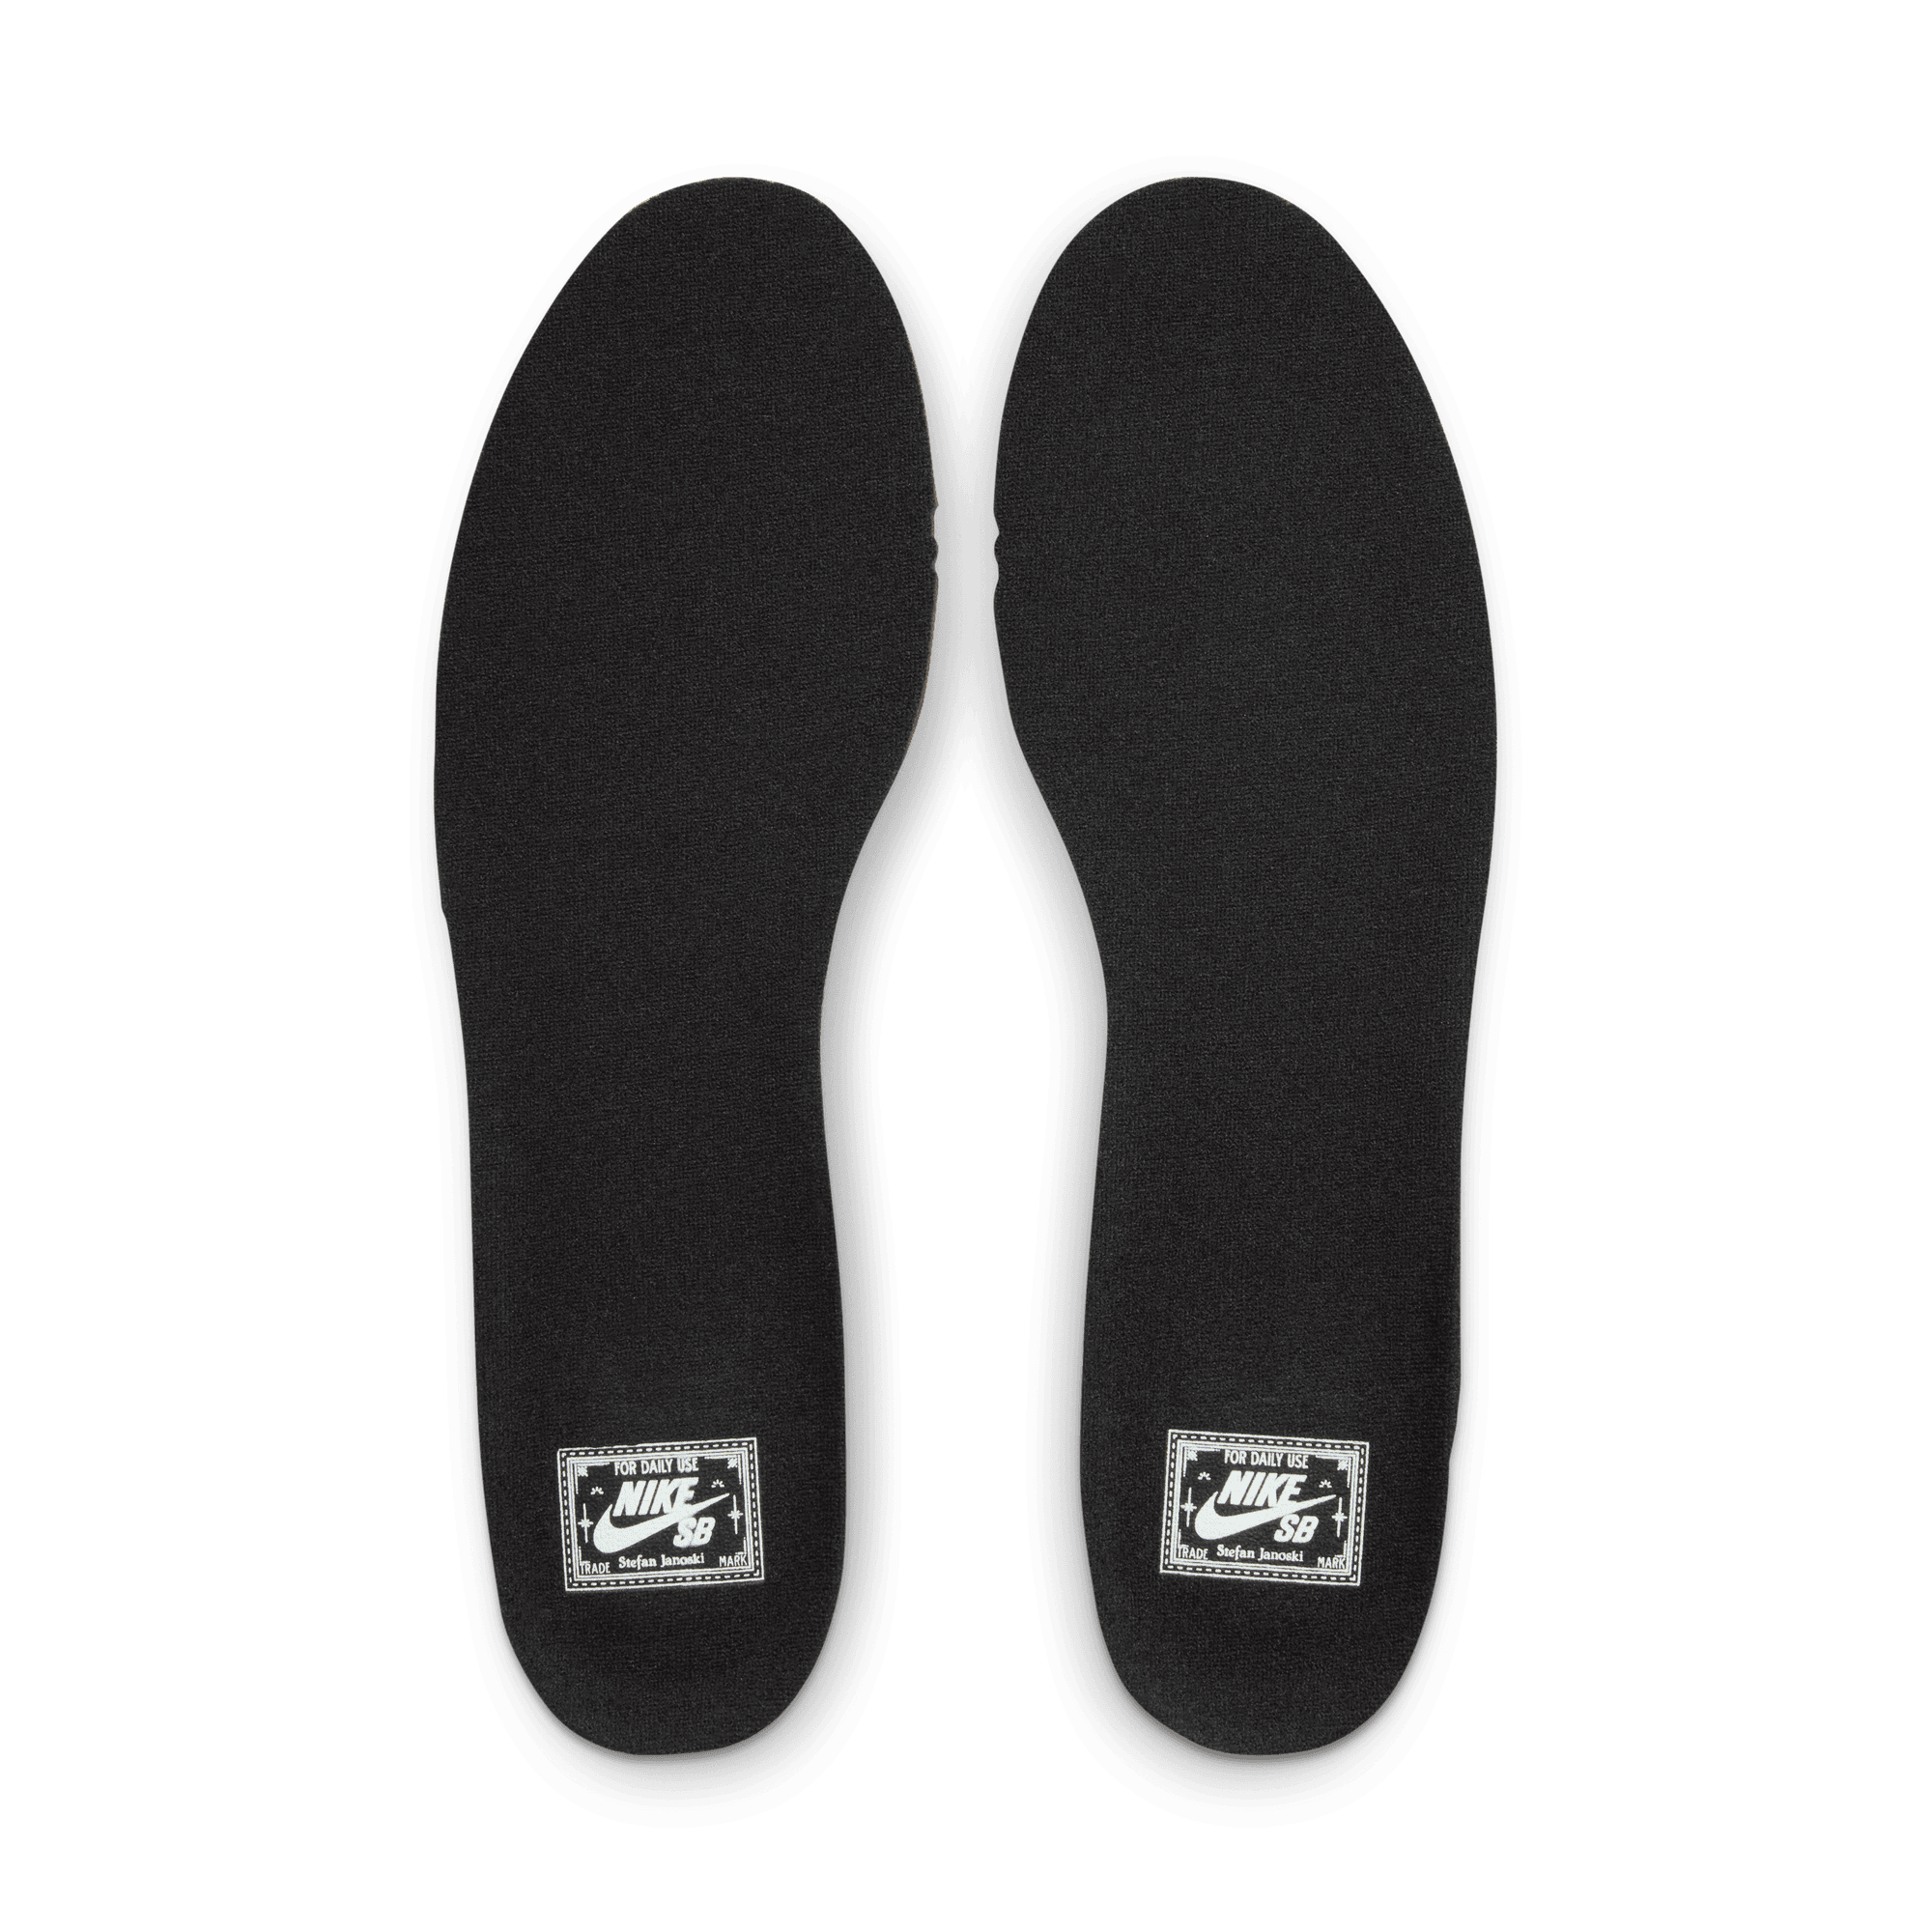 Black/White Janoski OG+ Nike SB Skate Shoe Insoles